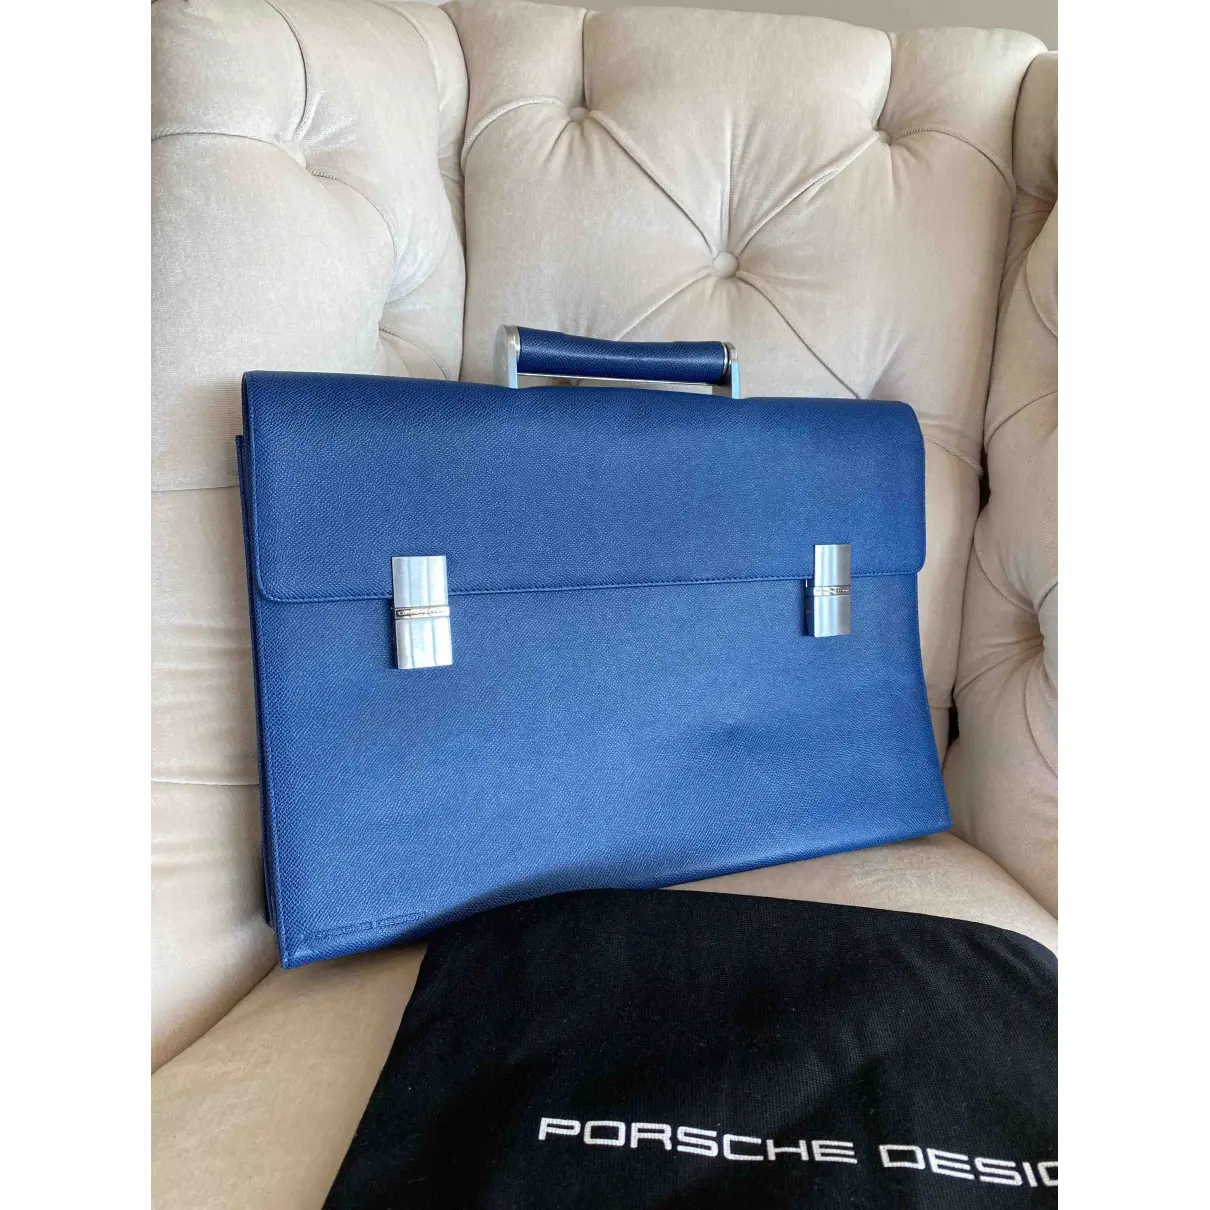 Buy Porsche Design Leather bag online